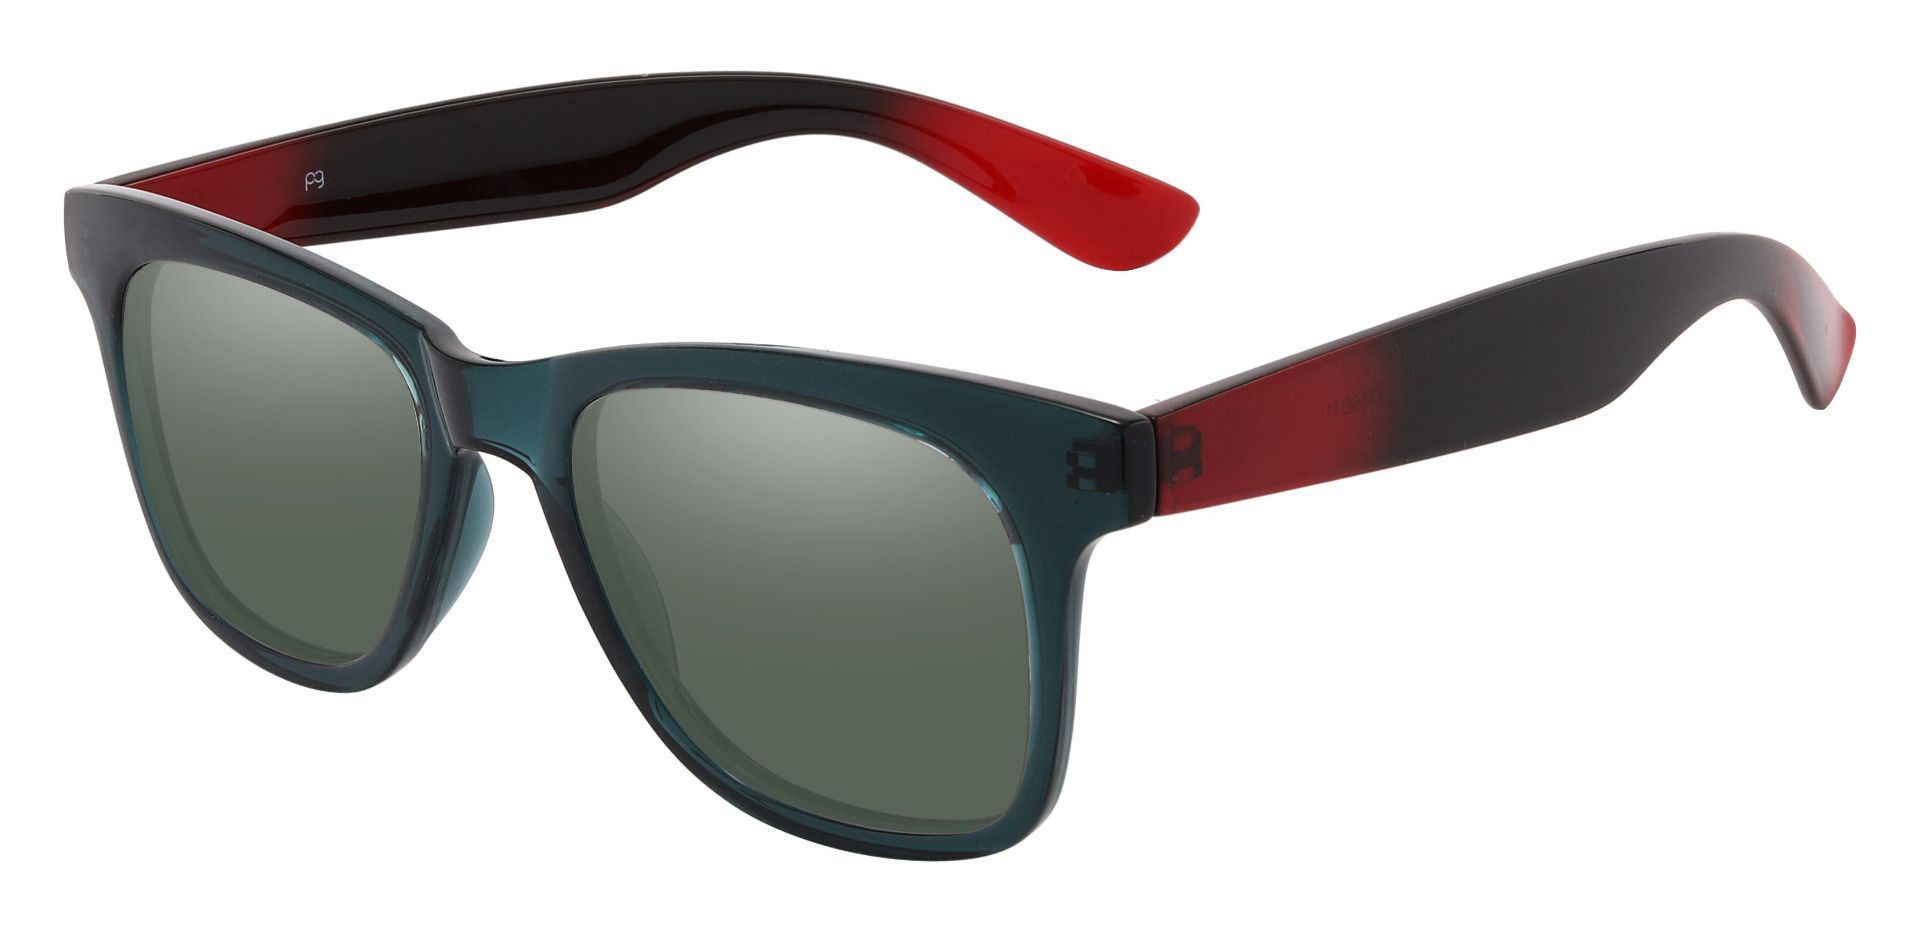 Hurley Square Prescription Sunglasses - Green Frame With Green Lenses